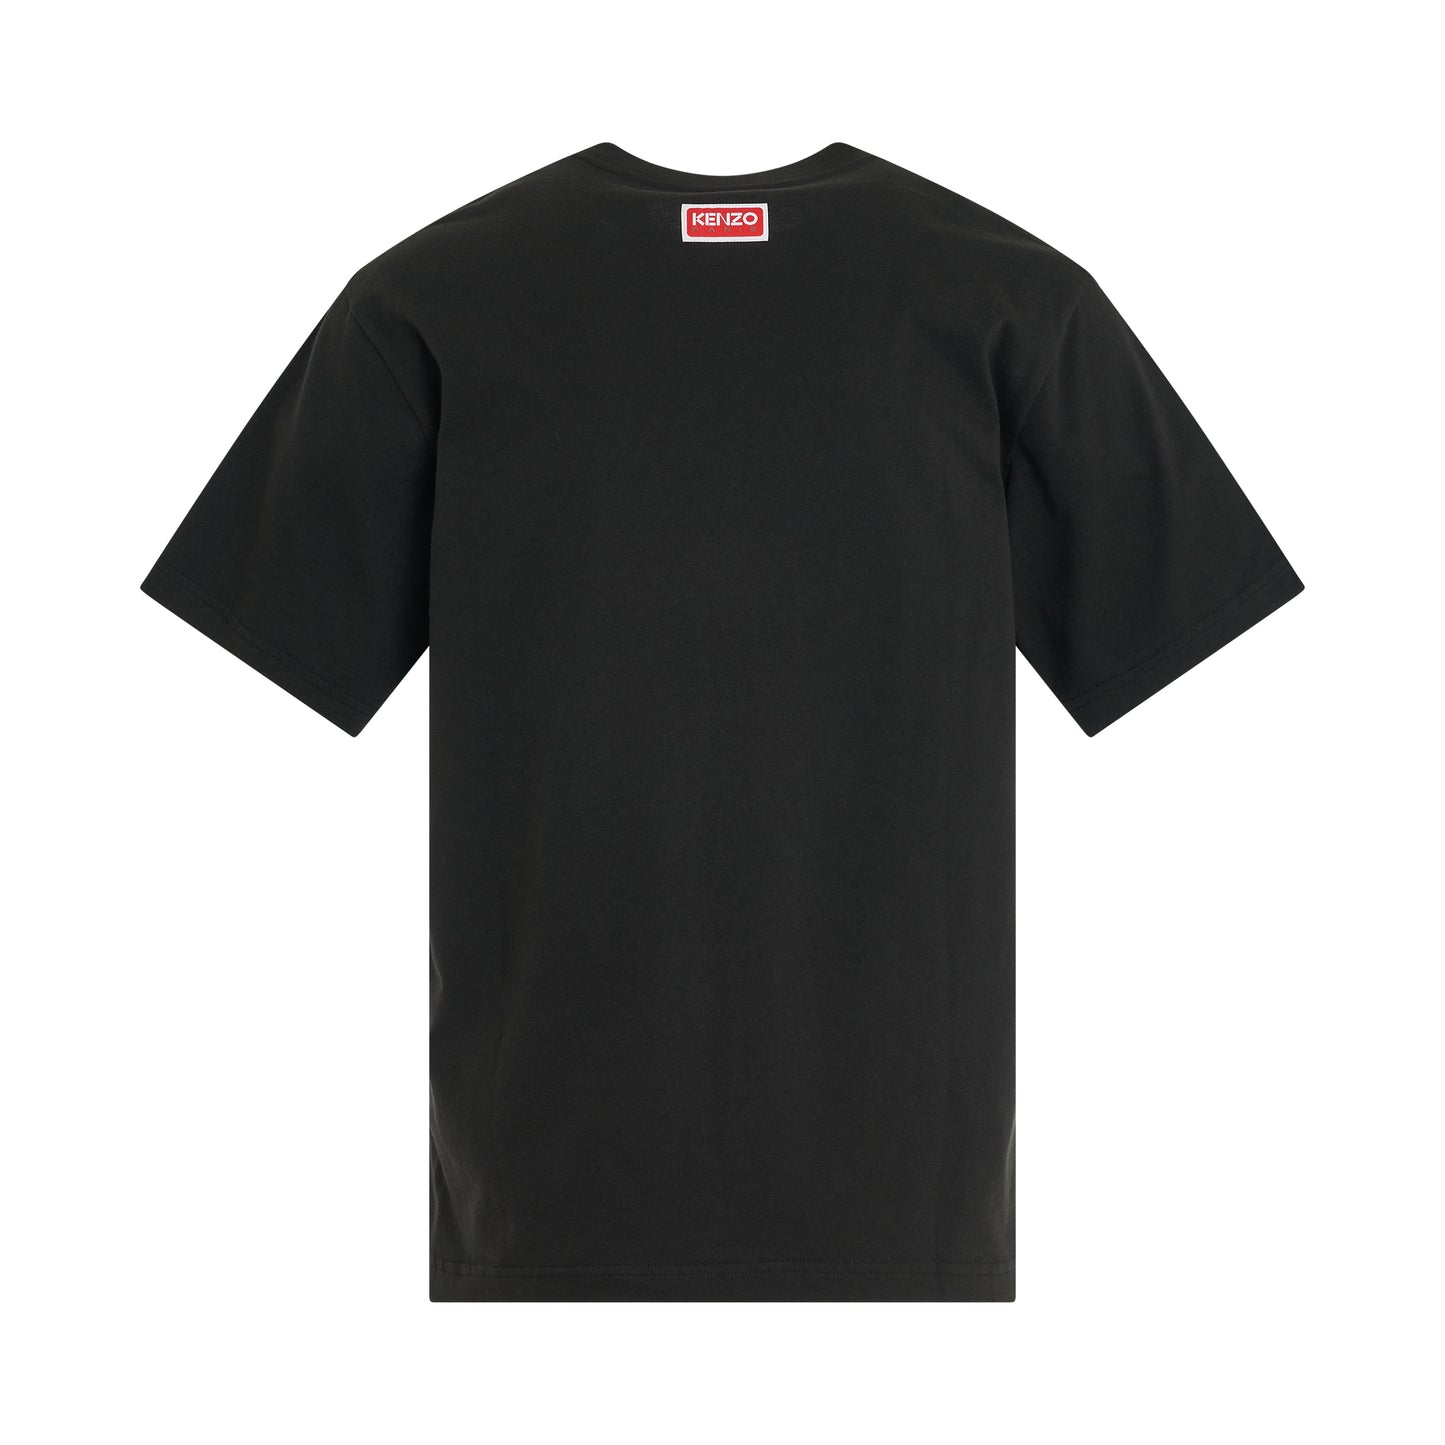 Kenzo Elephant Classic T-Shirt in Black